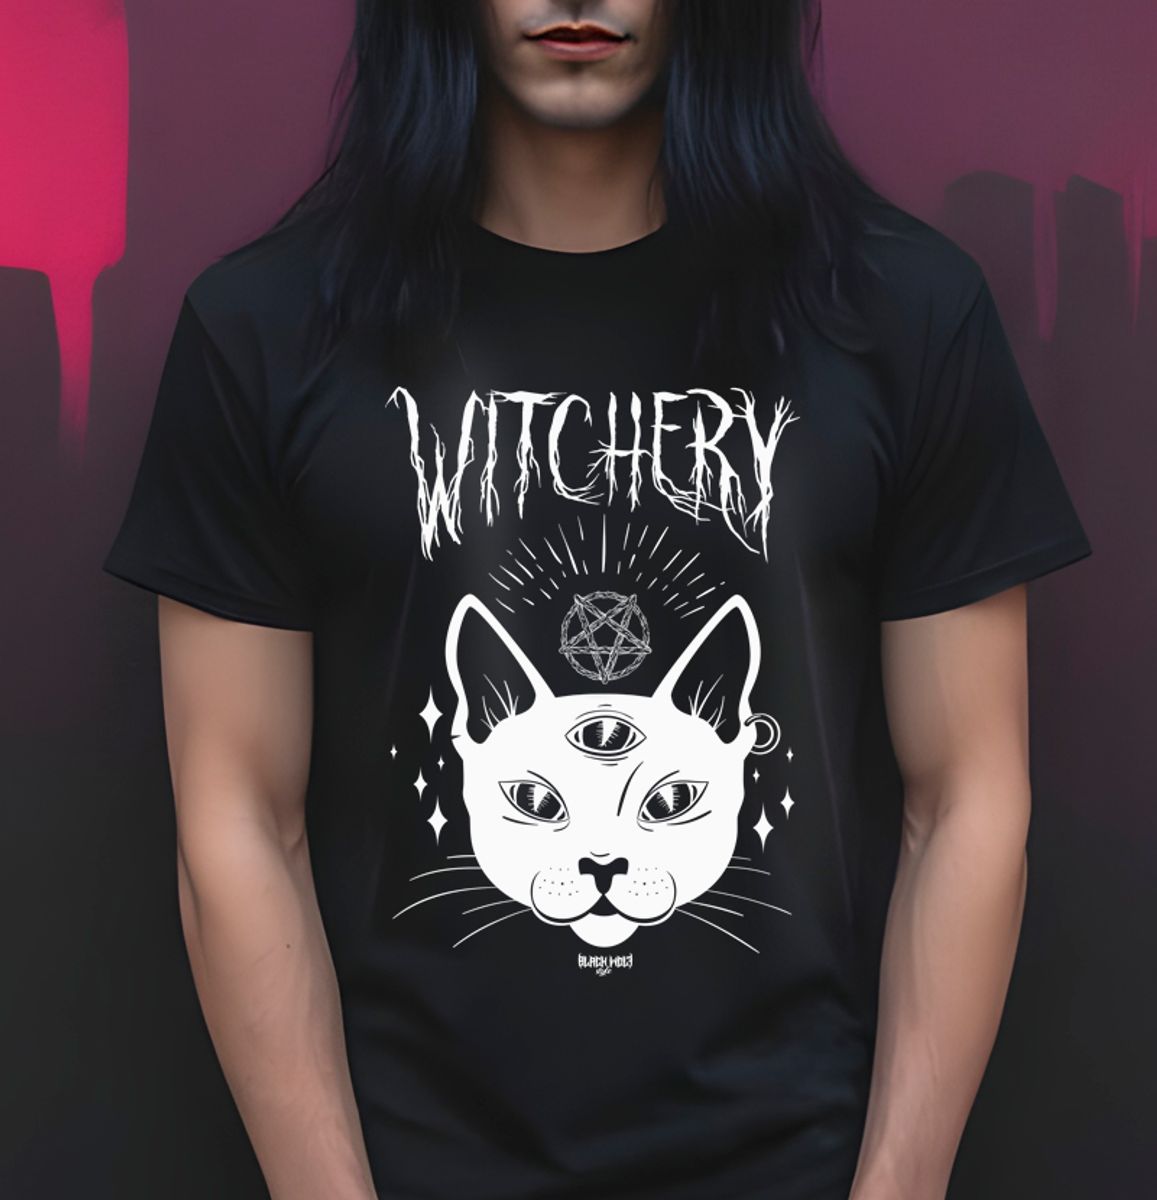 Nome do produto: Witchery